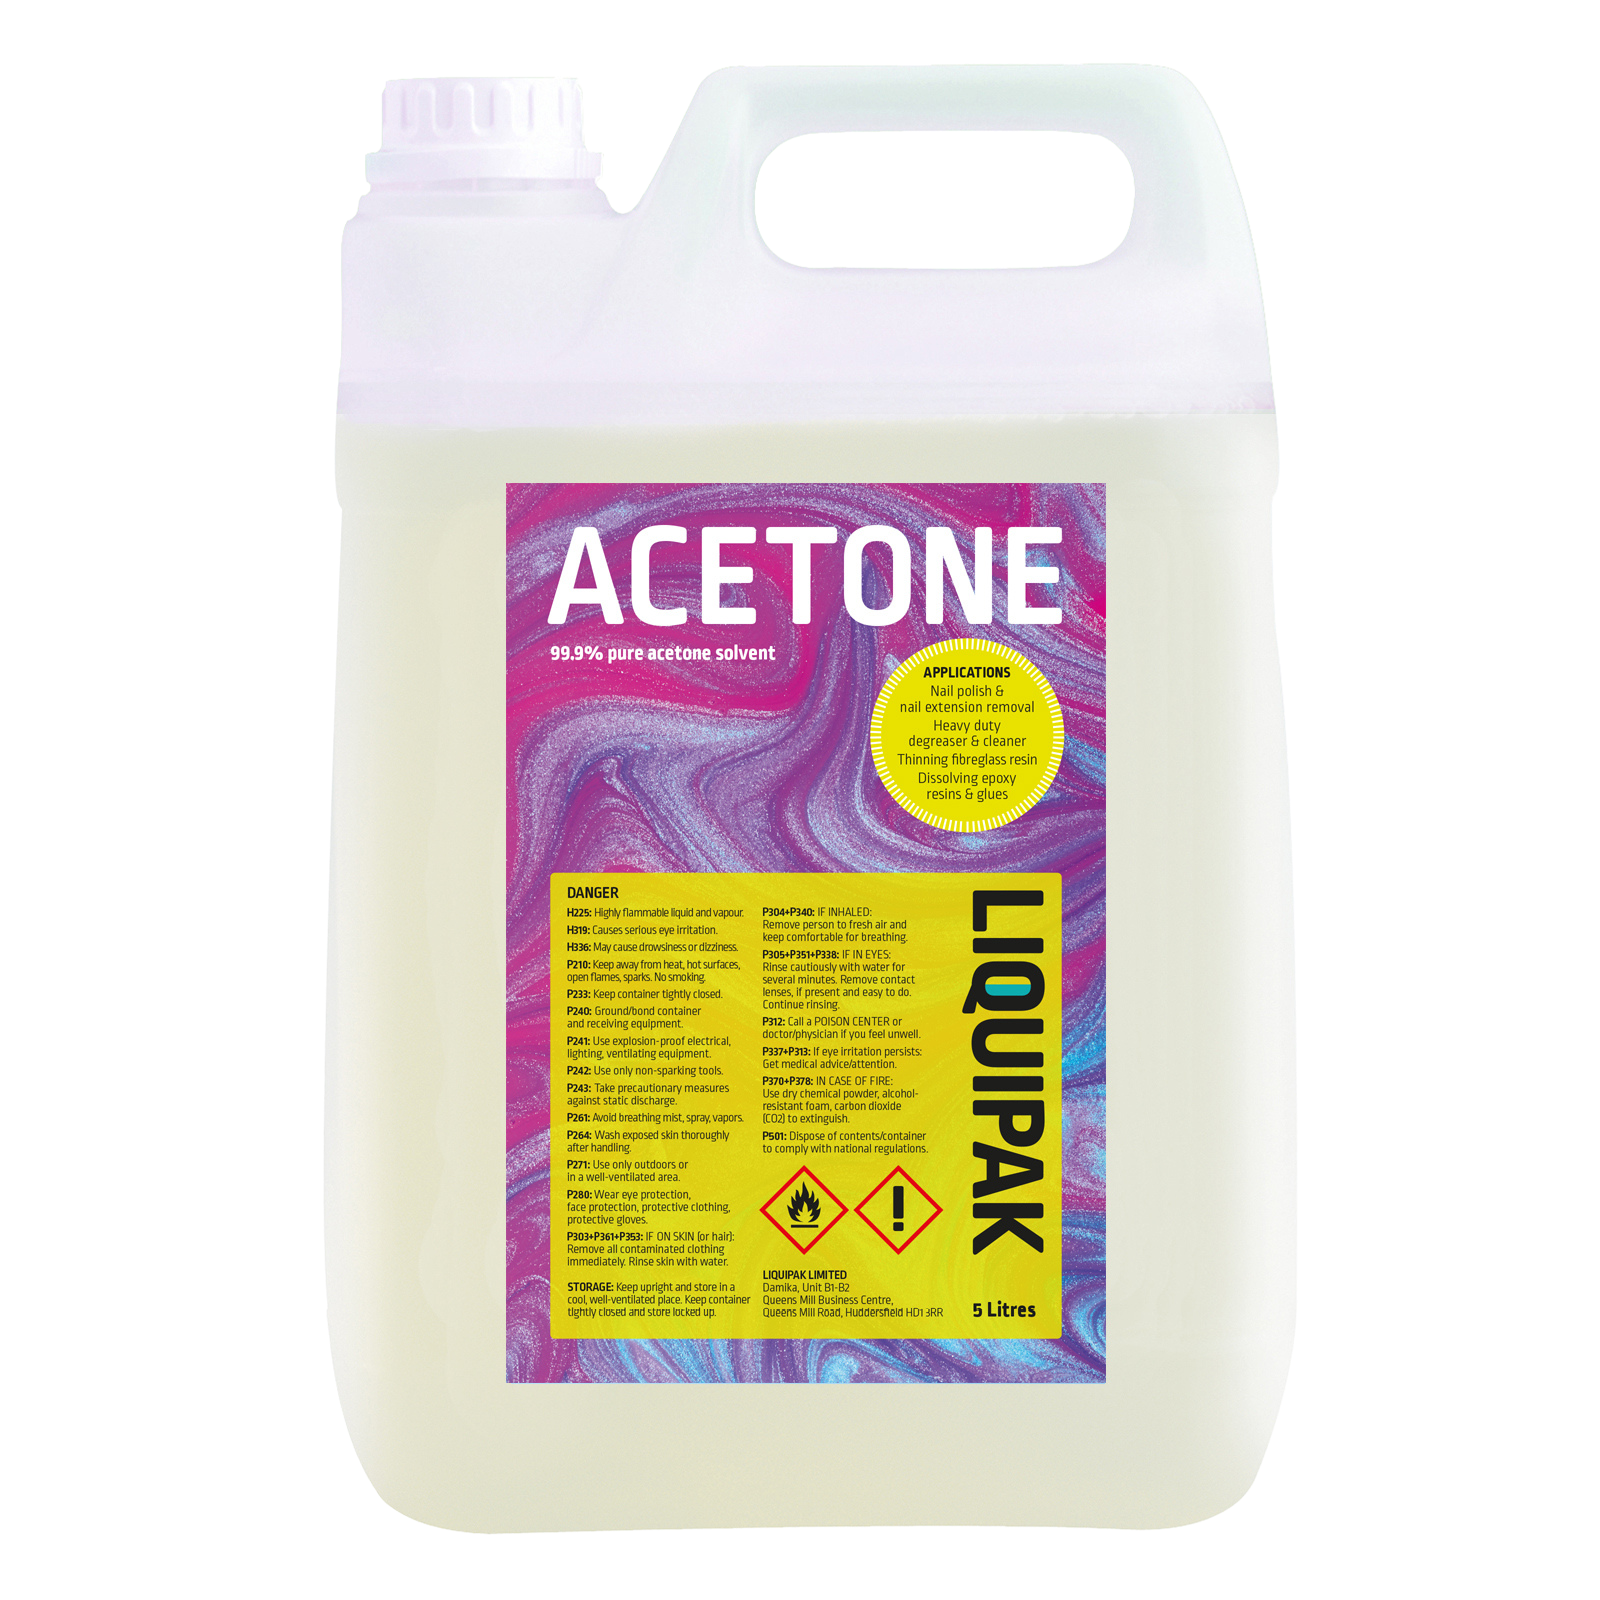 Liquipak - Acetone 99.9% 5Litres | Nail Polish Remover